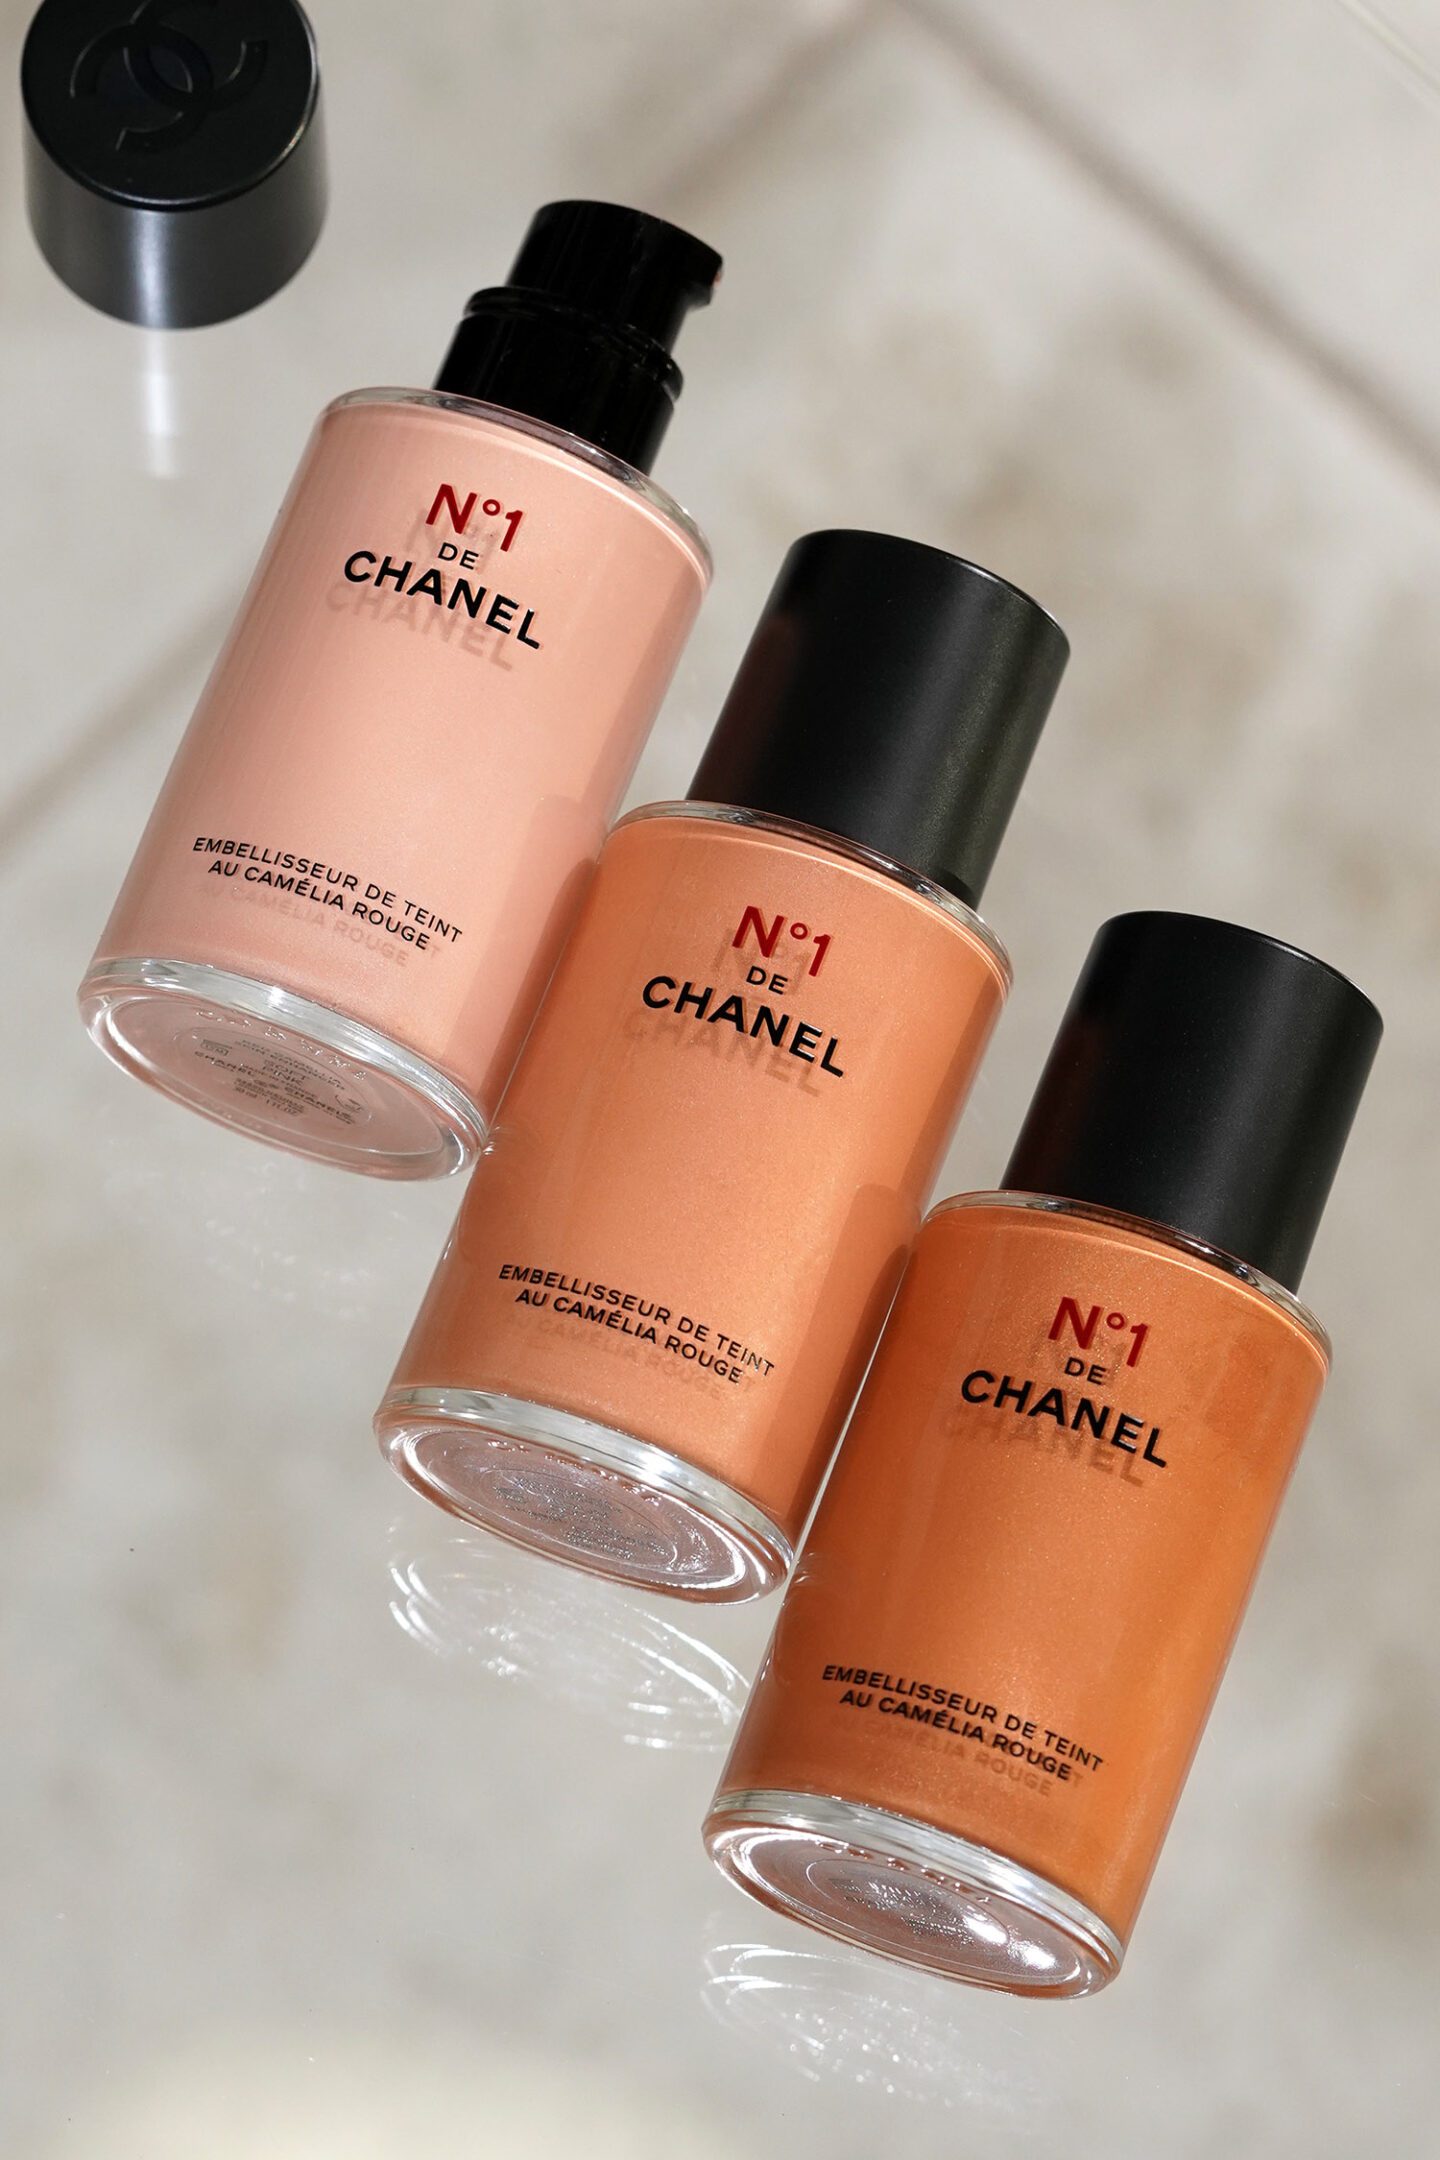 No 1 de Chanel Skin Enhancer Soft Pink and Medium Coral and Intense Amber